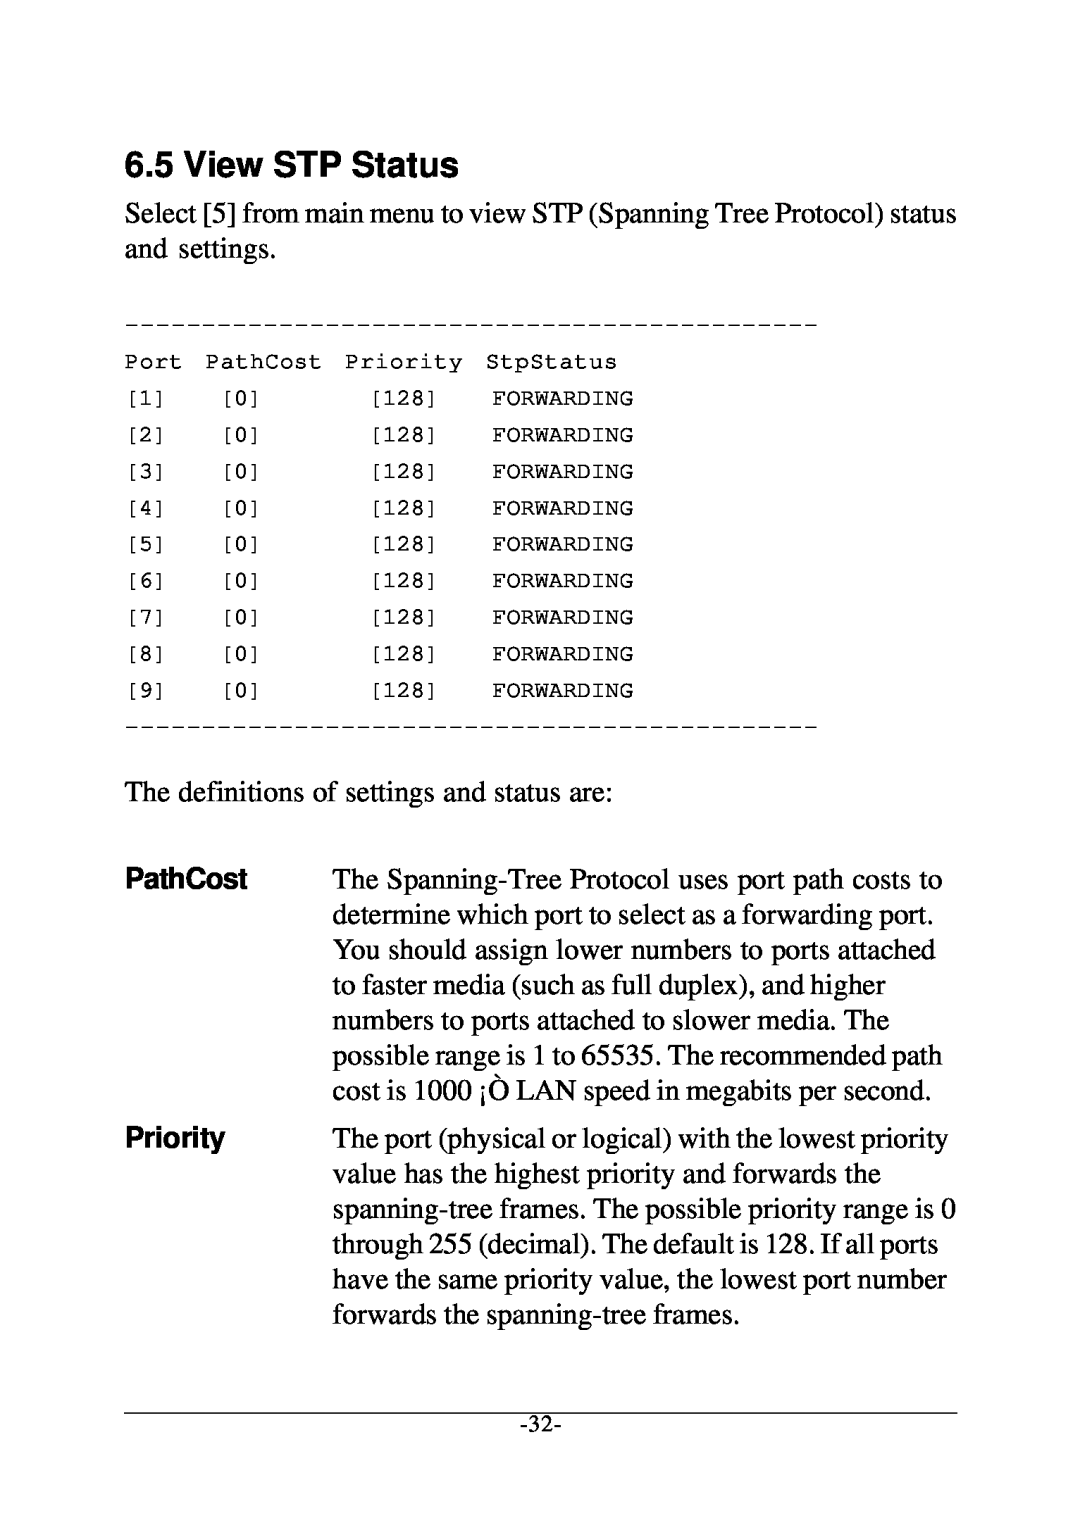 Xerox KS-801 operation manual View STP Status, PathCost, Priority 